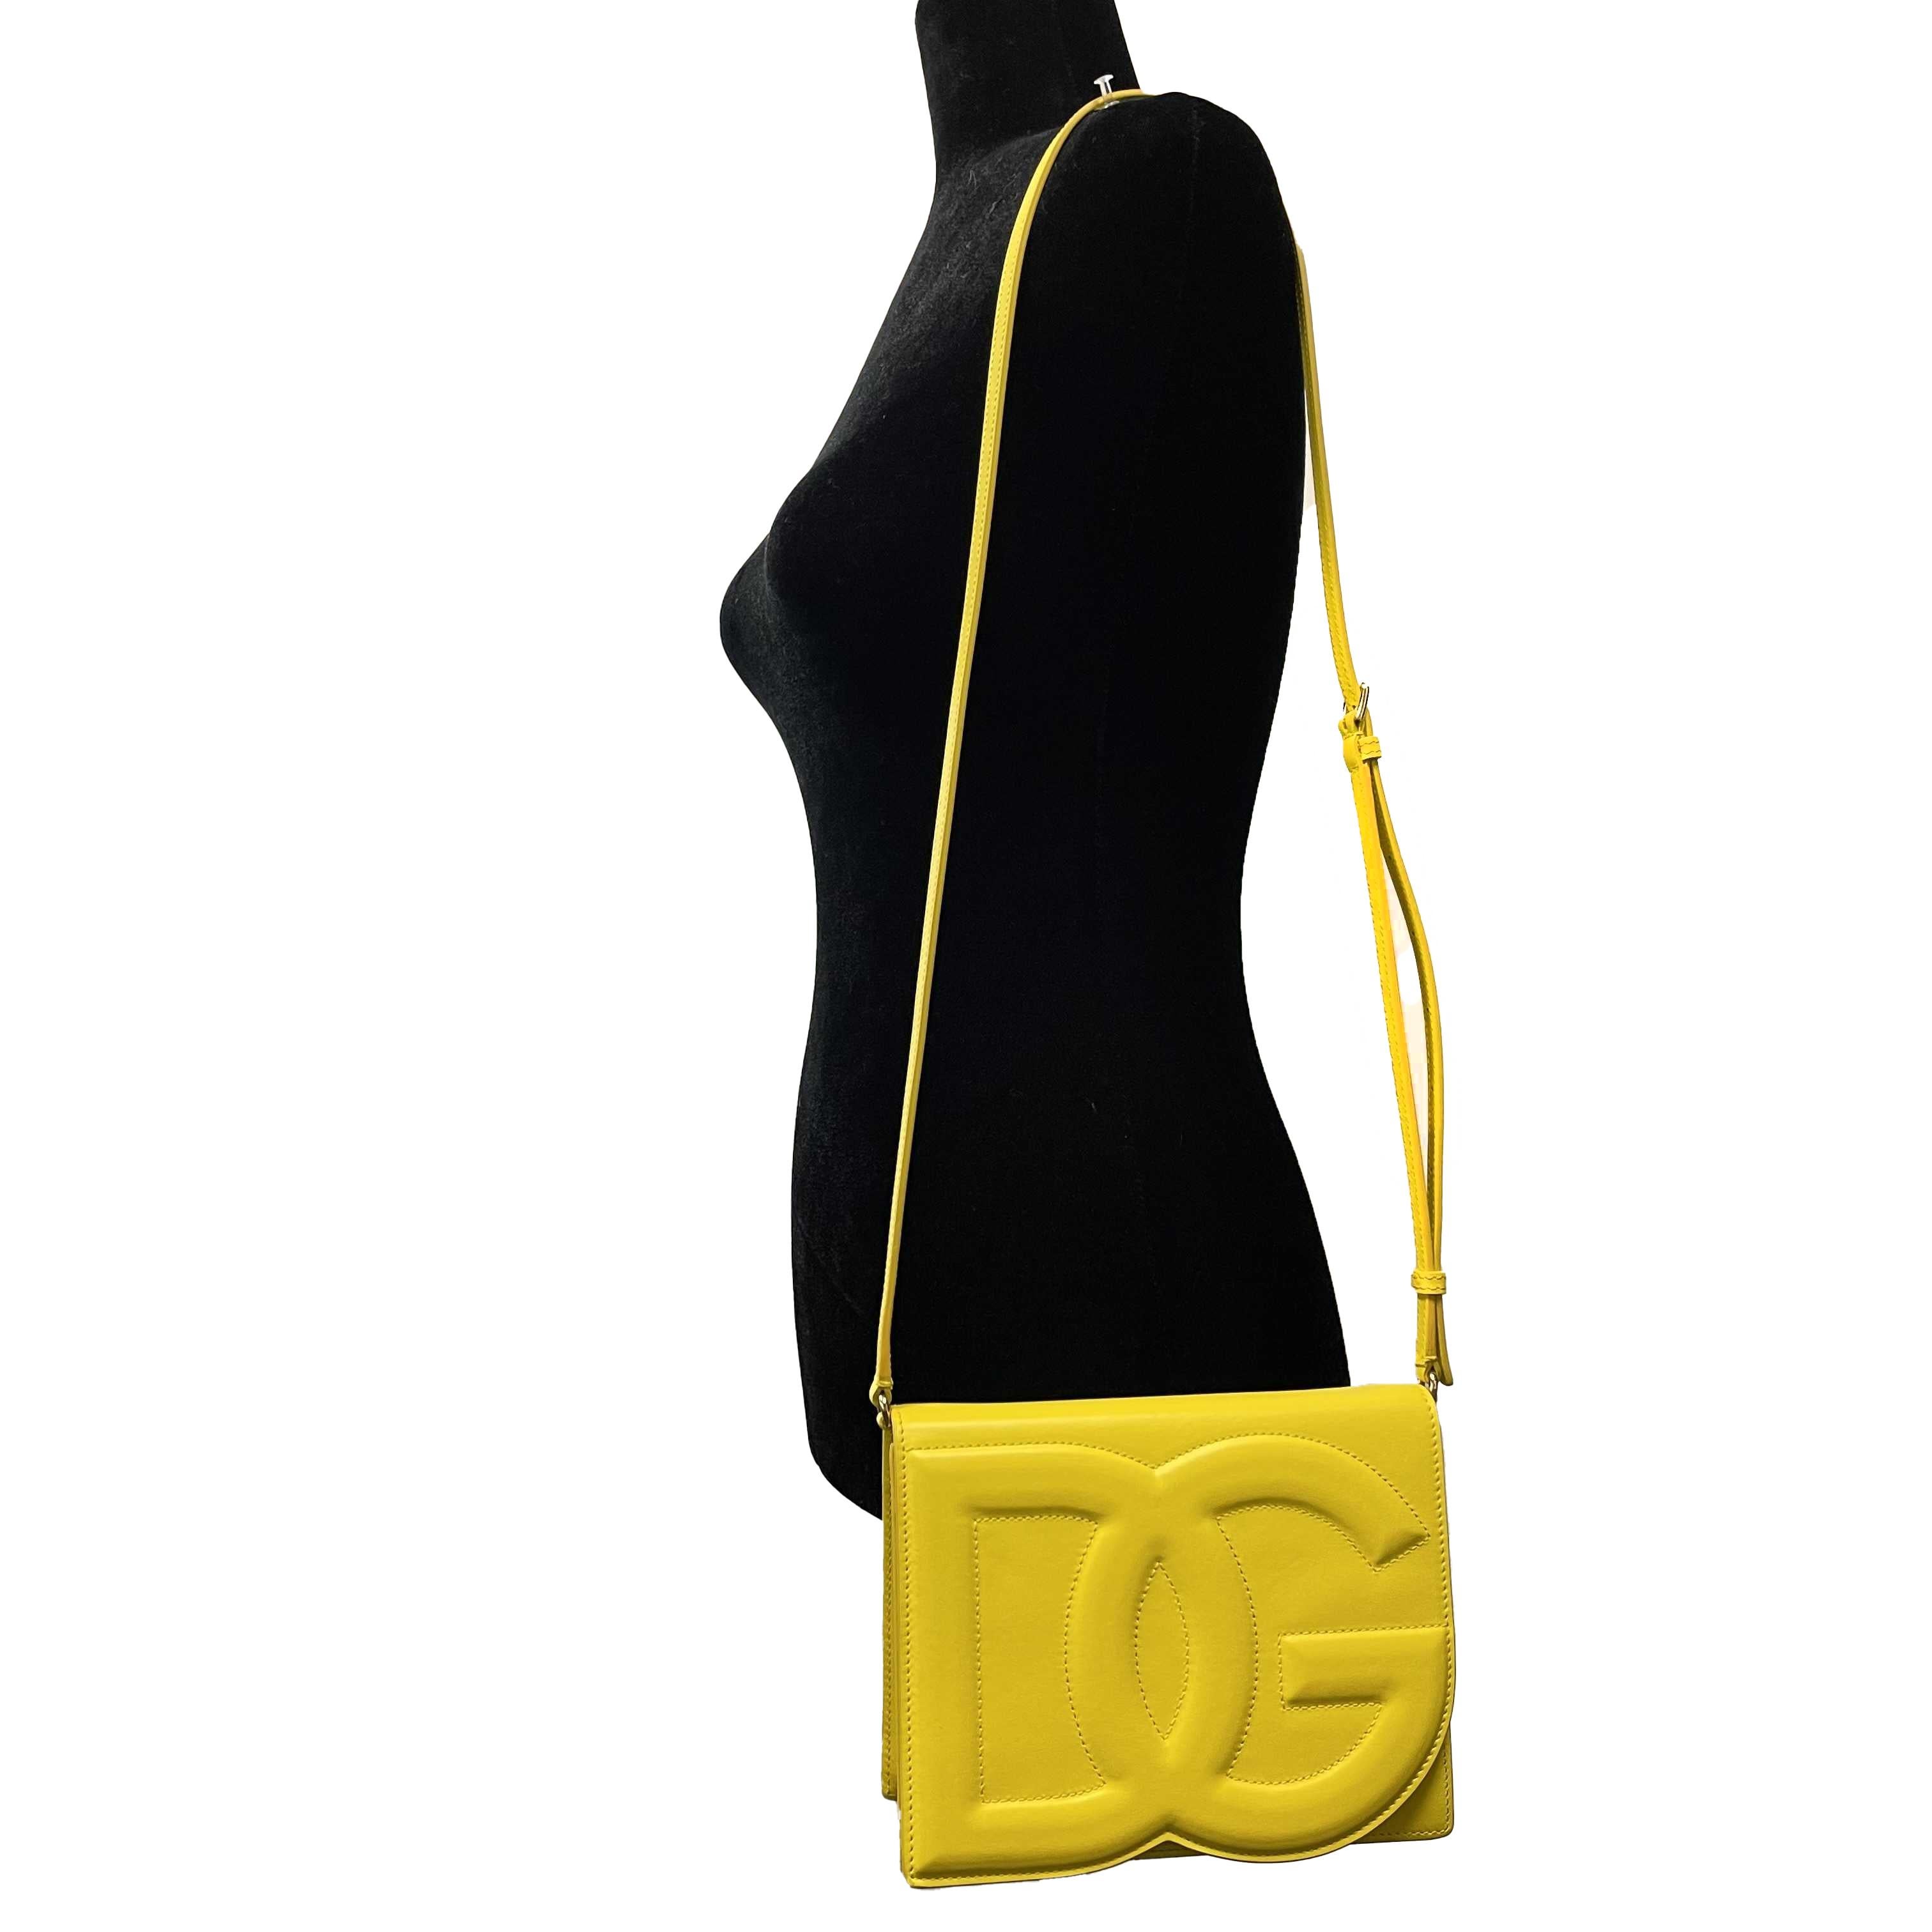 	Dolce & Gabbana - NEW DG Logo Yellow Crossbody / Shoulder Bag 3